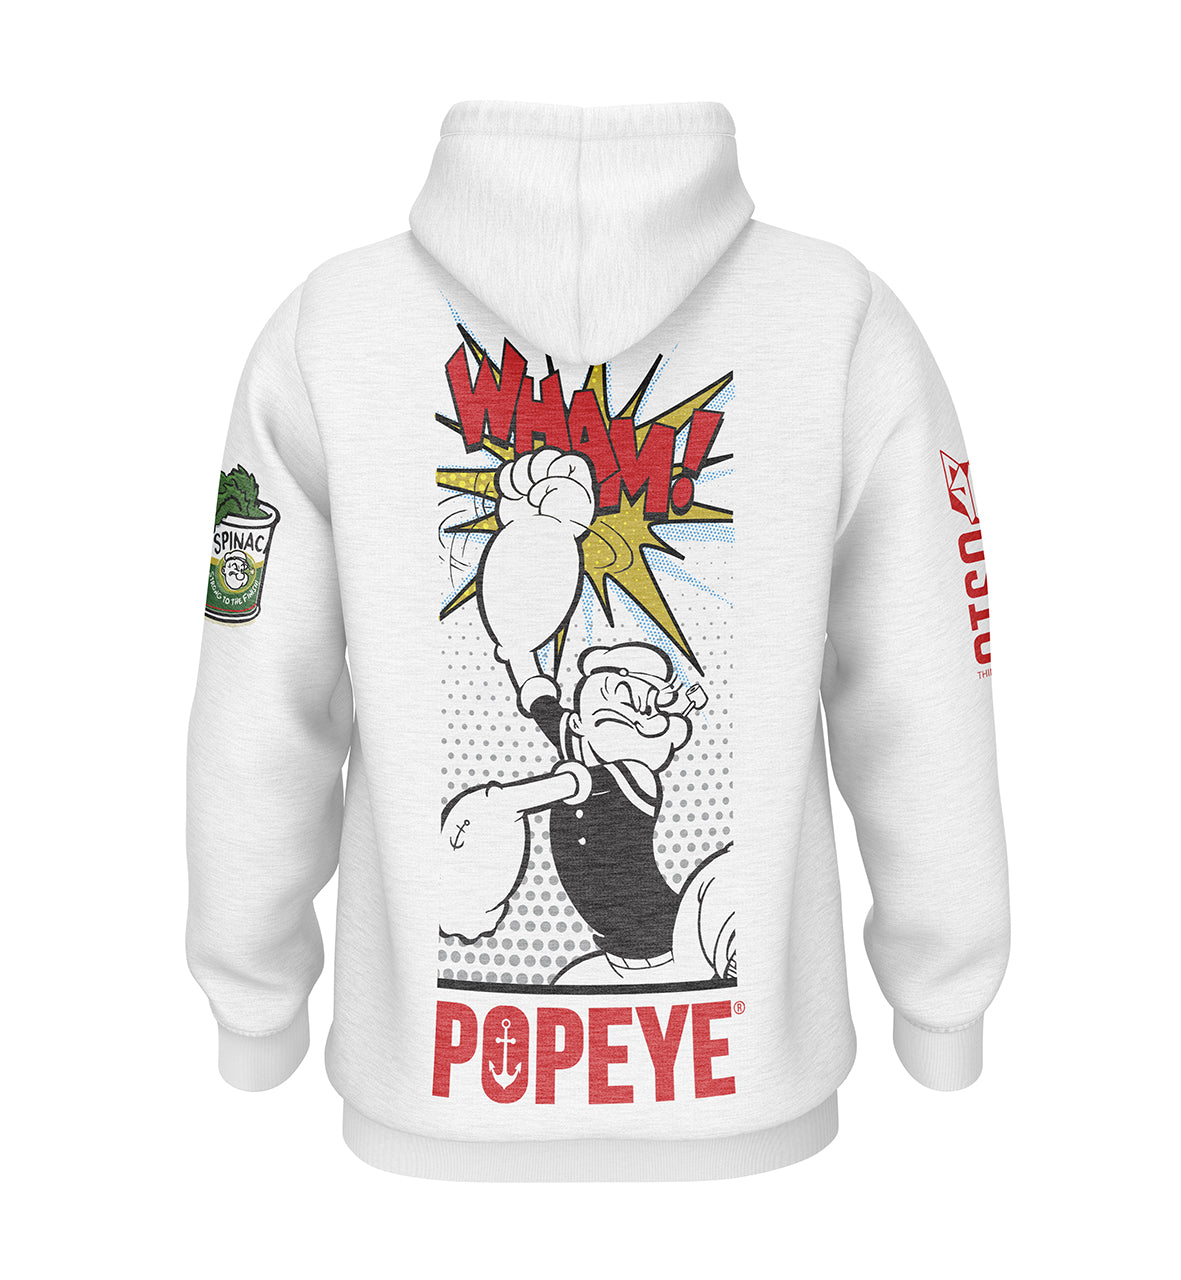 Camisola - Popeye Pop Art